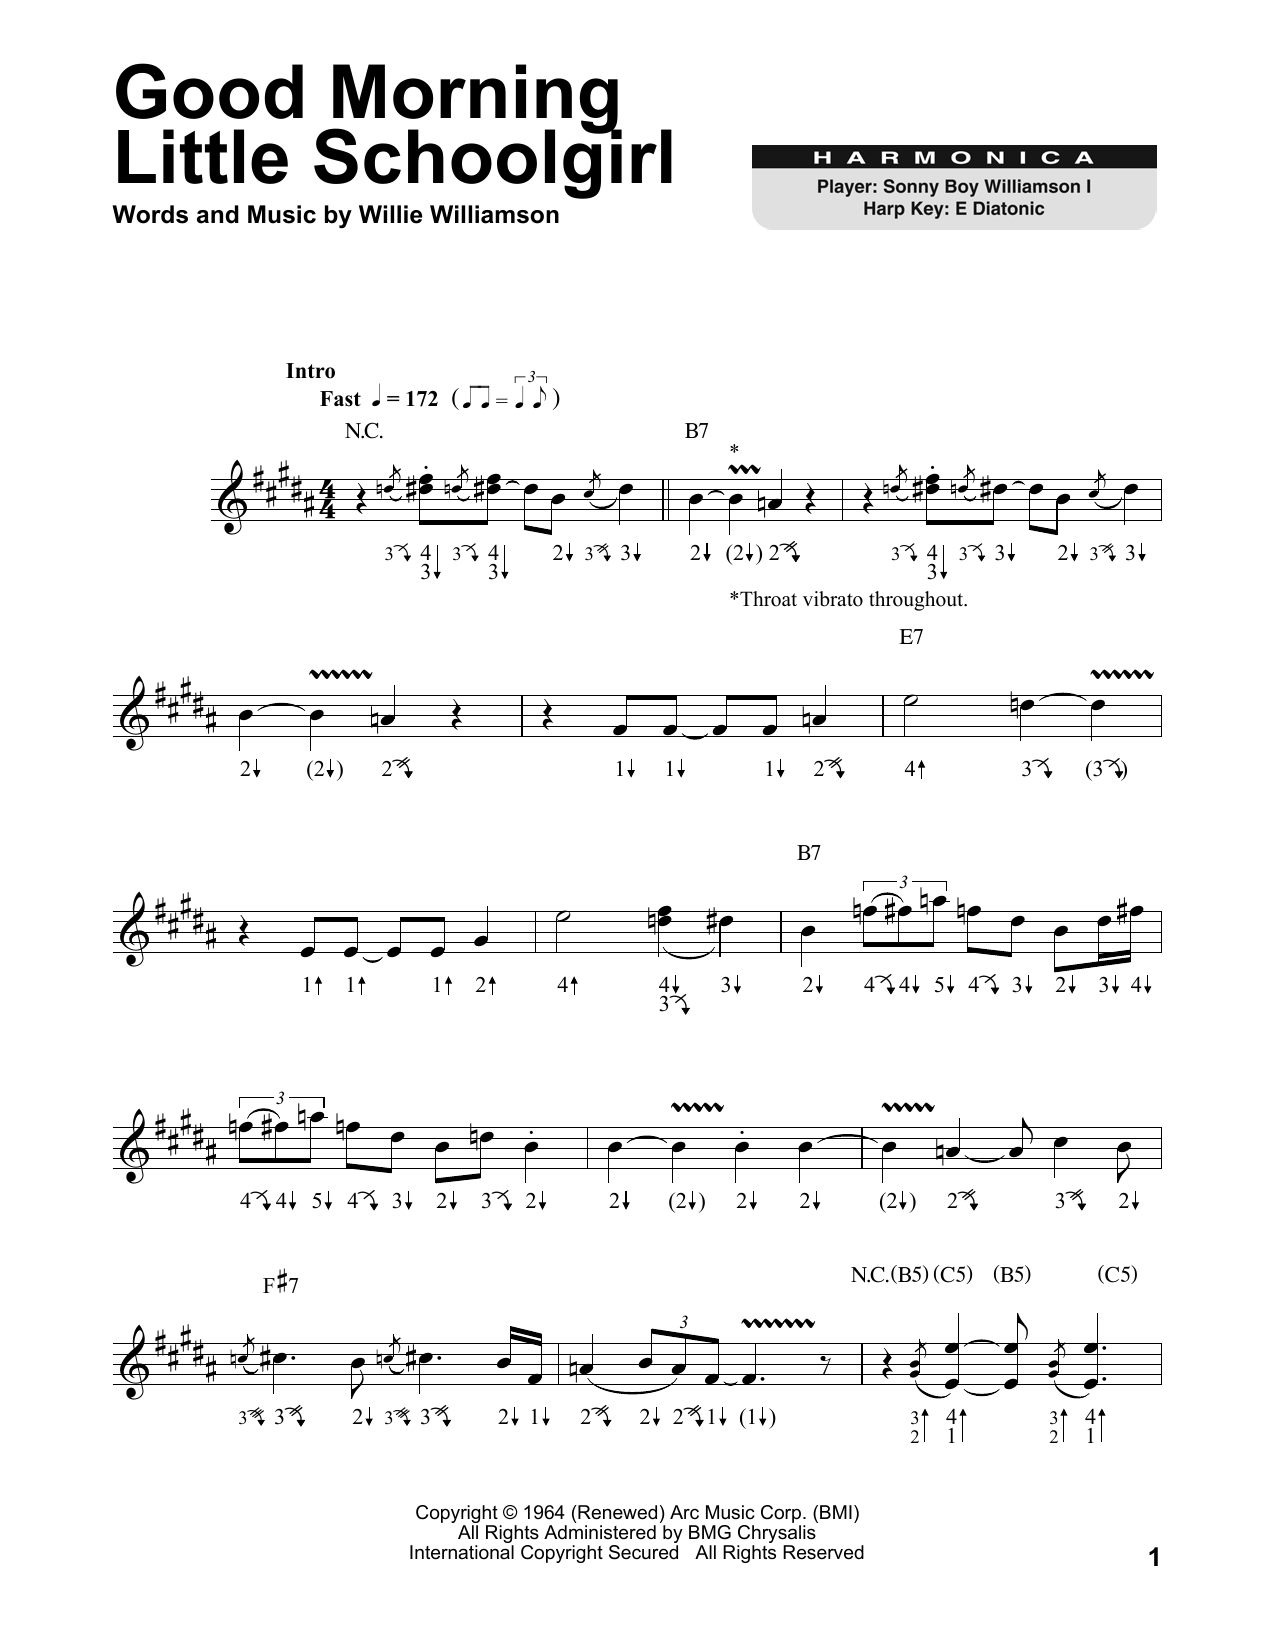 Sonny Boy Williamson Good Morning Little Schoolgirl sheet music notes and chords arranged for Guitar Chords/Lyrics